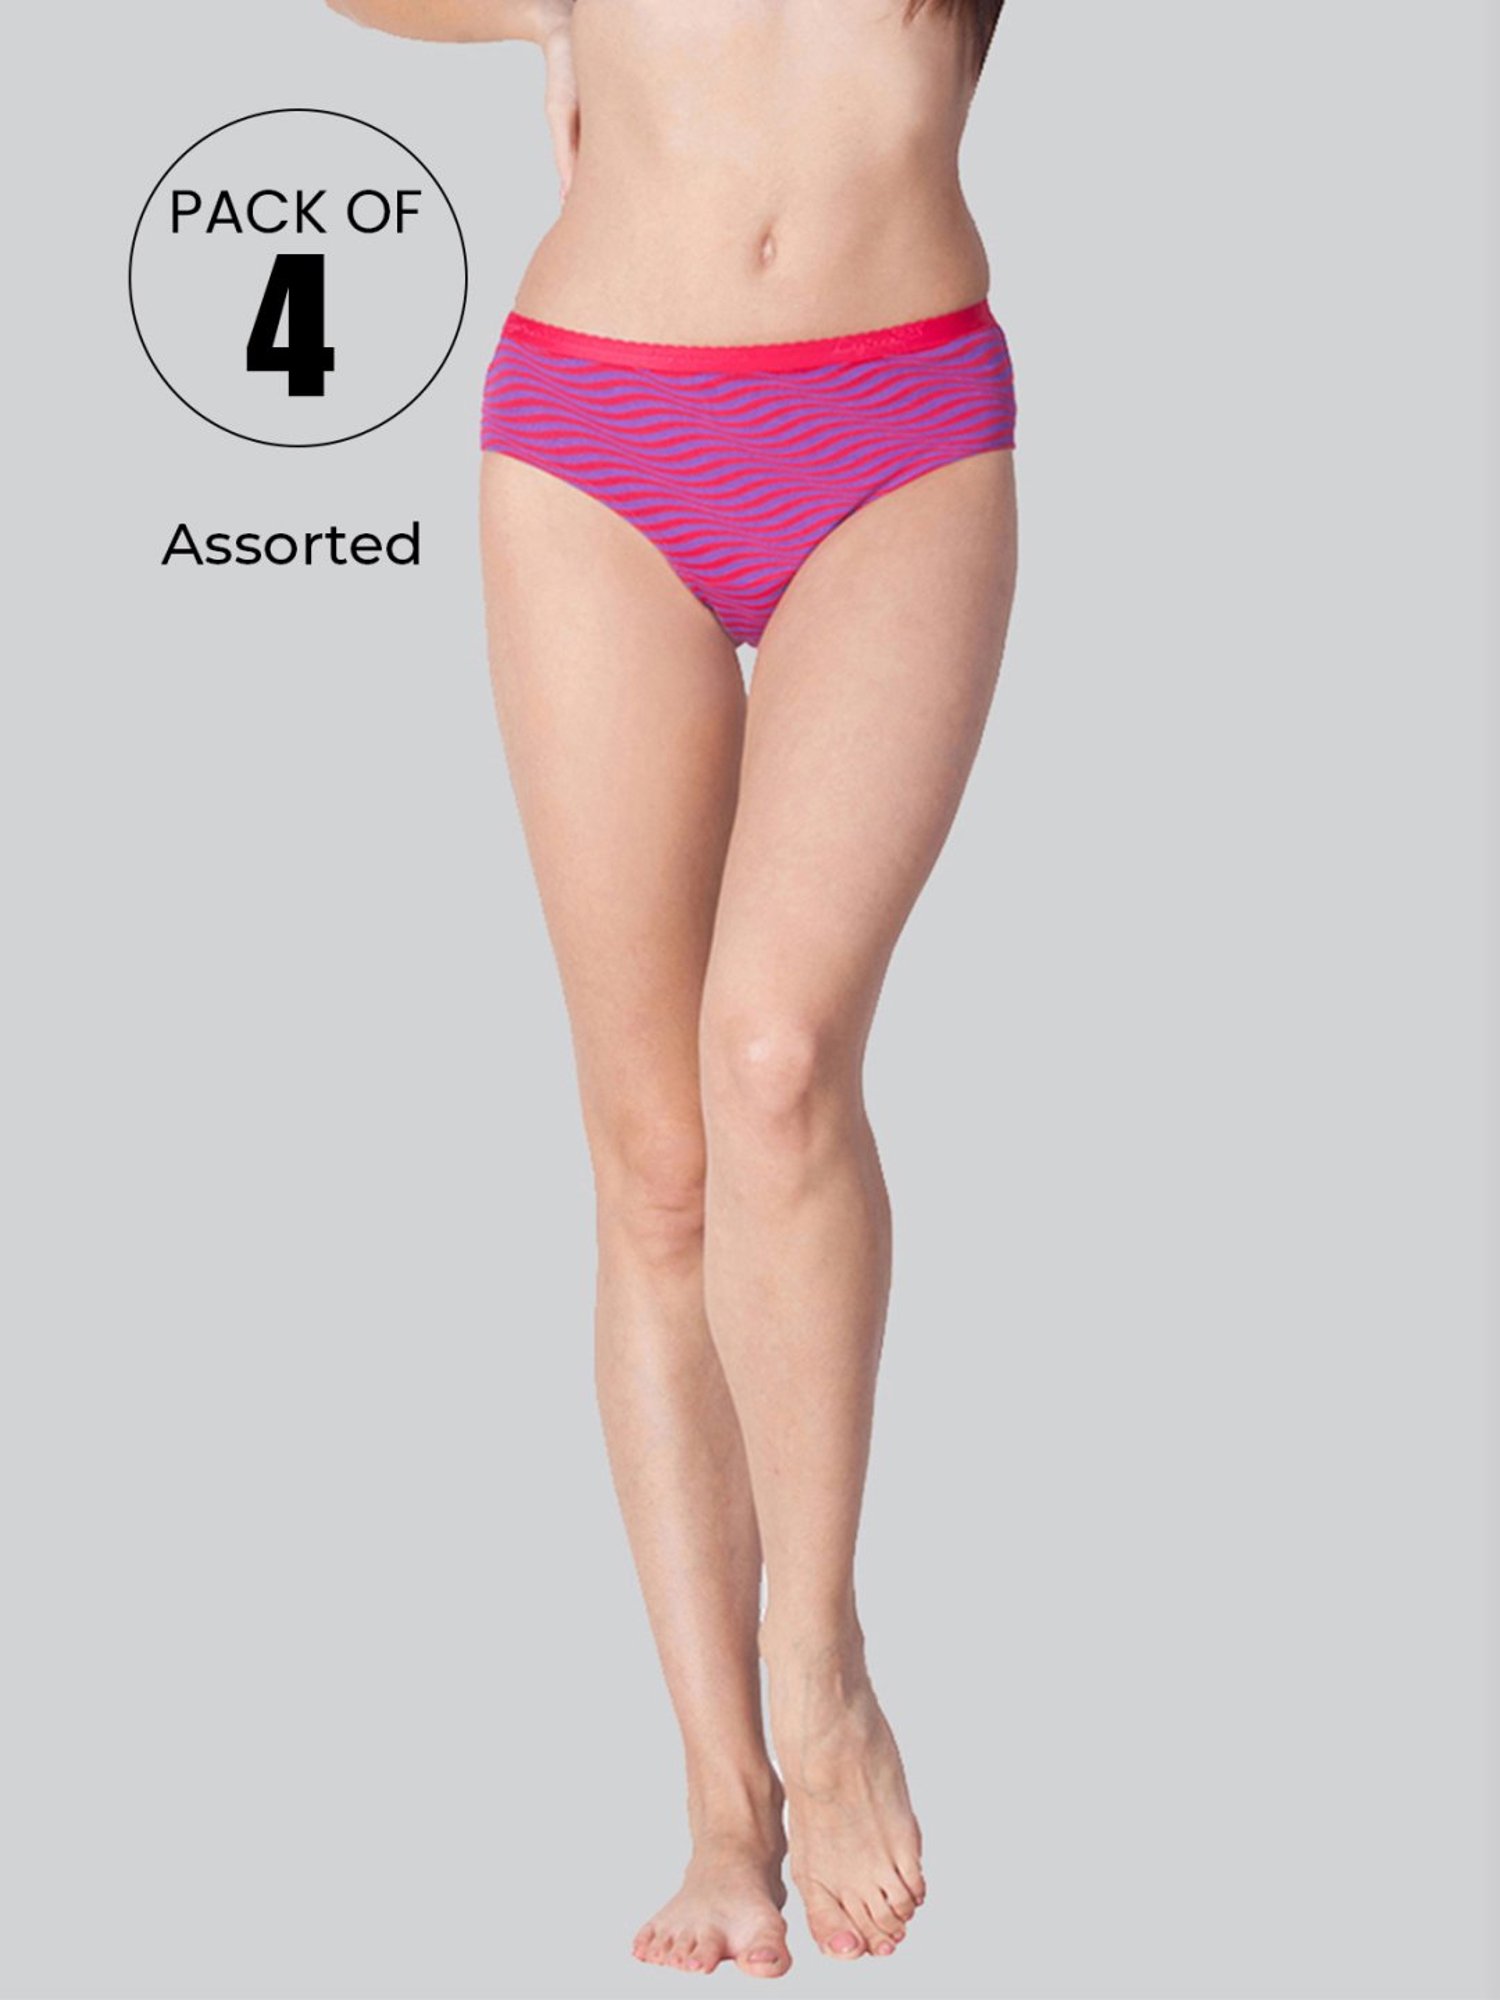 Buy Lyra Assorted Color Cotton Bikini Panties - Pack Of 8 for